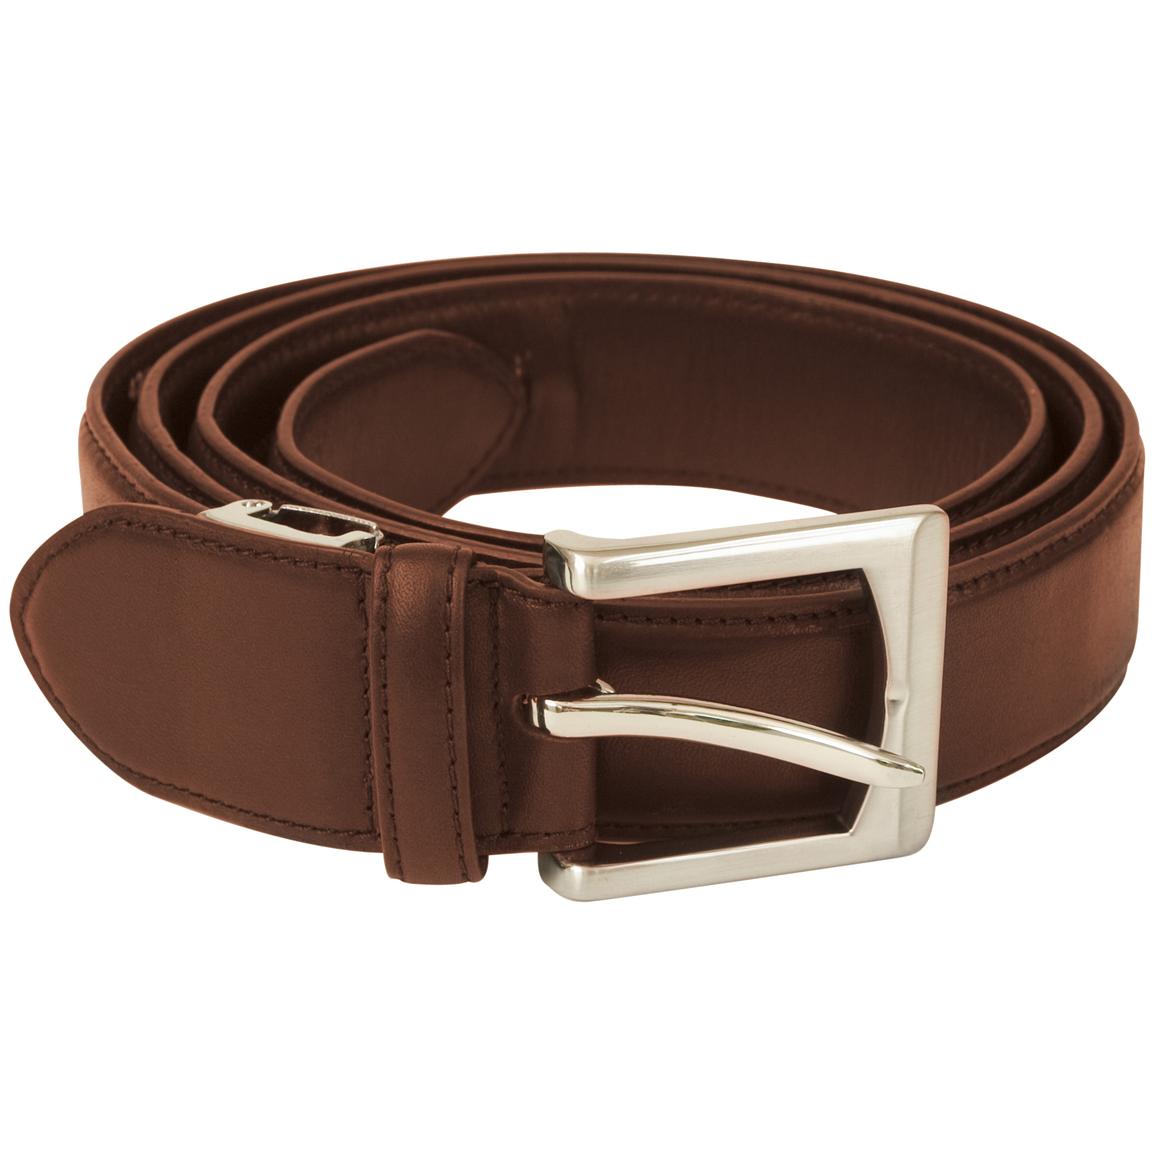 Travelon Leather Money Belt - 229602, Belts & Suspenders at Sportsman's ...